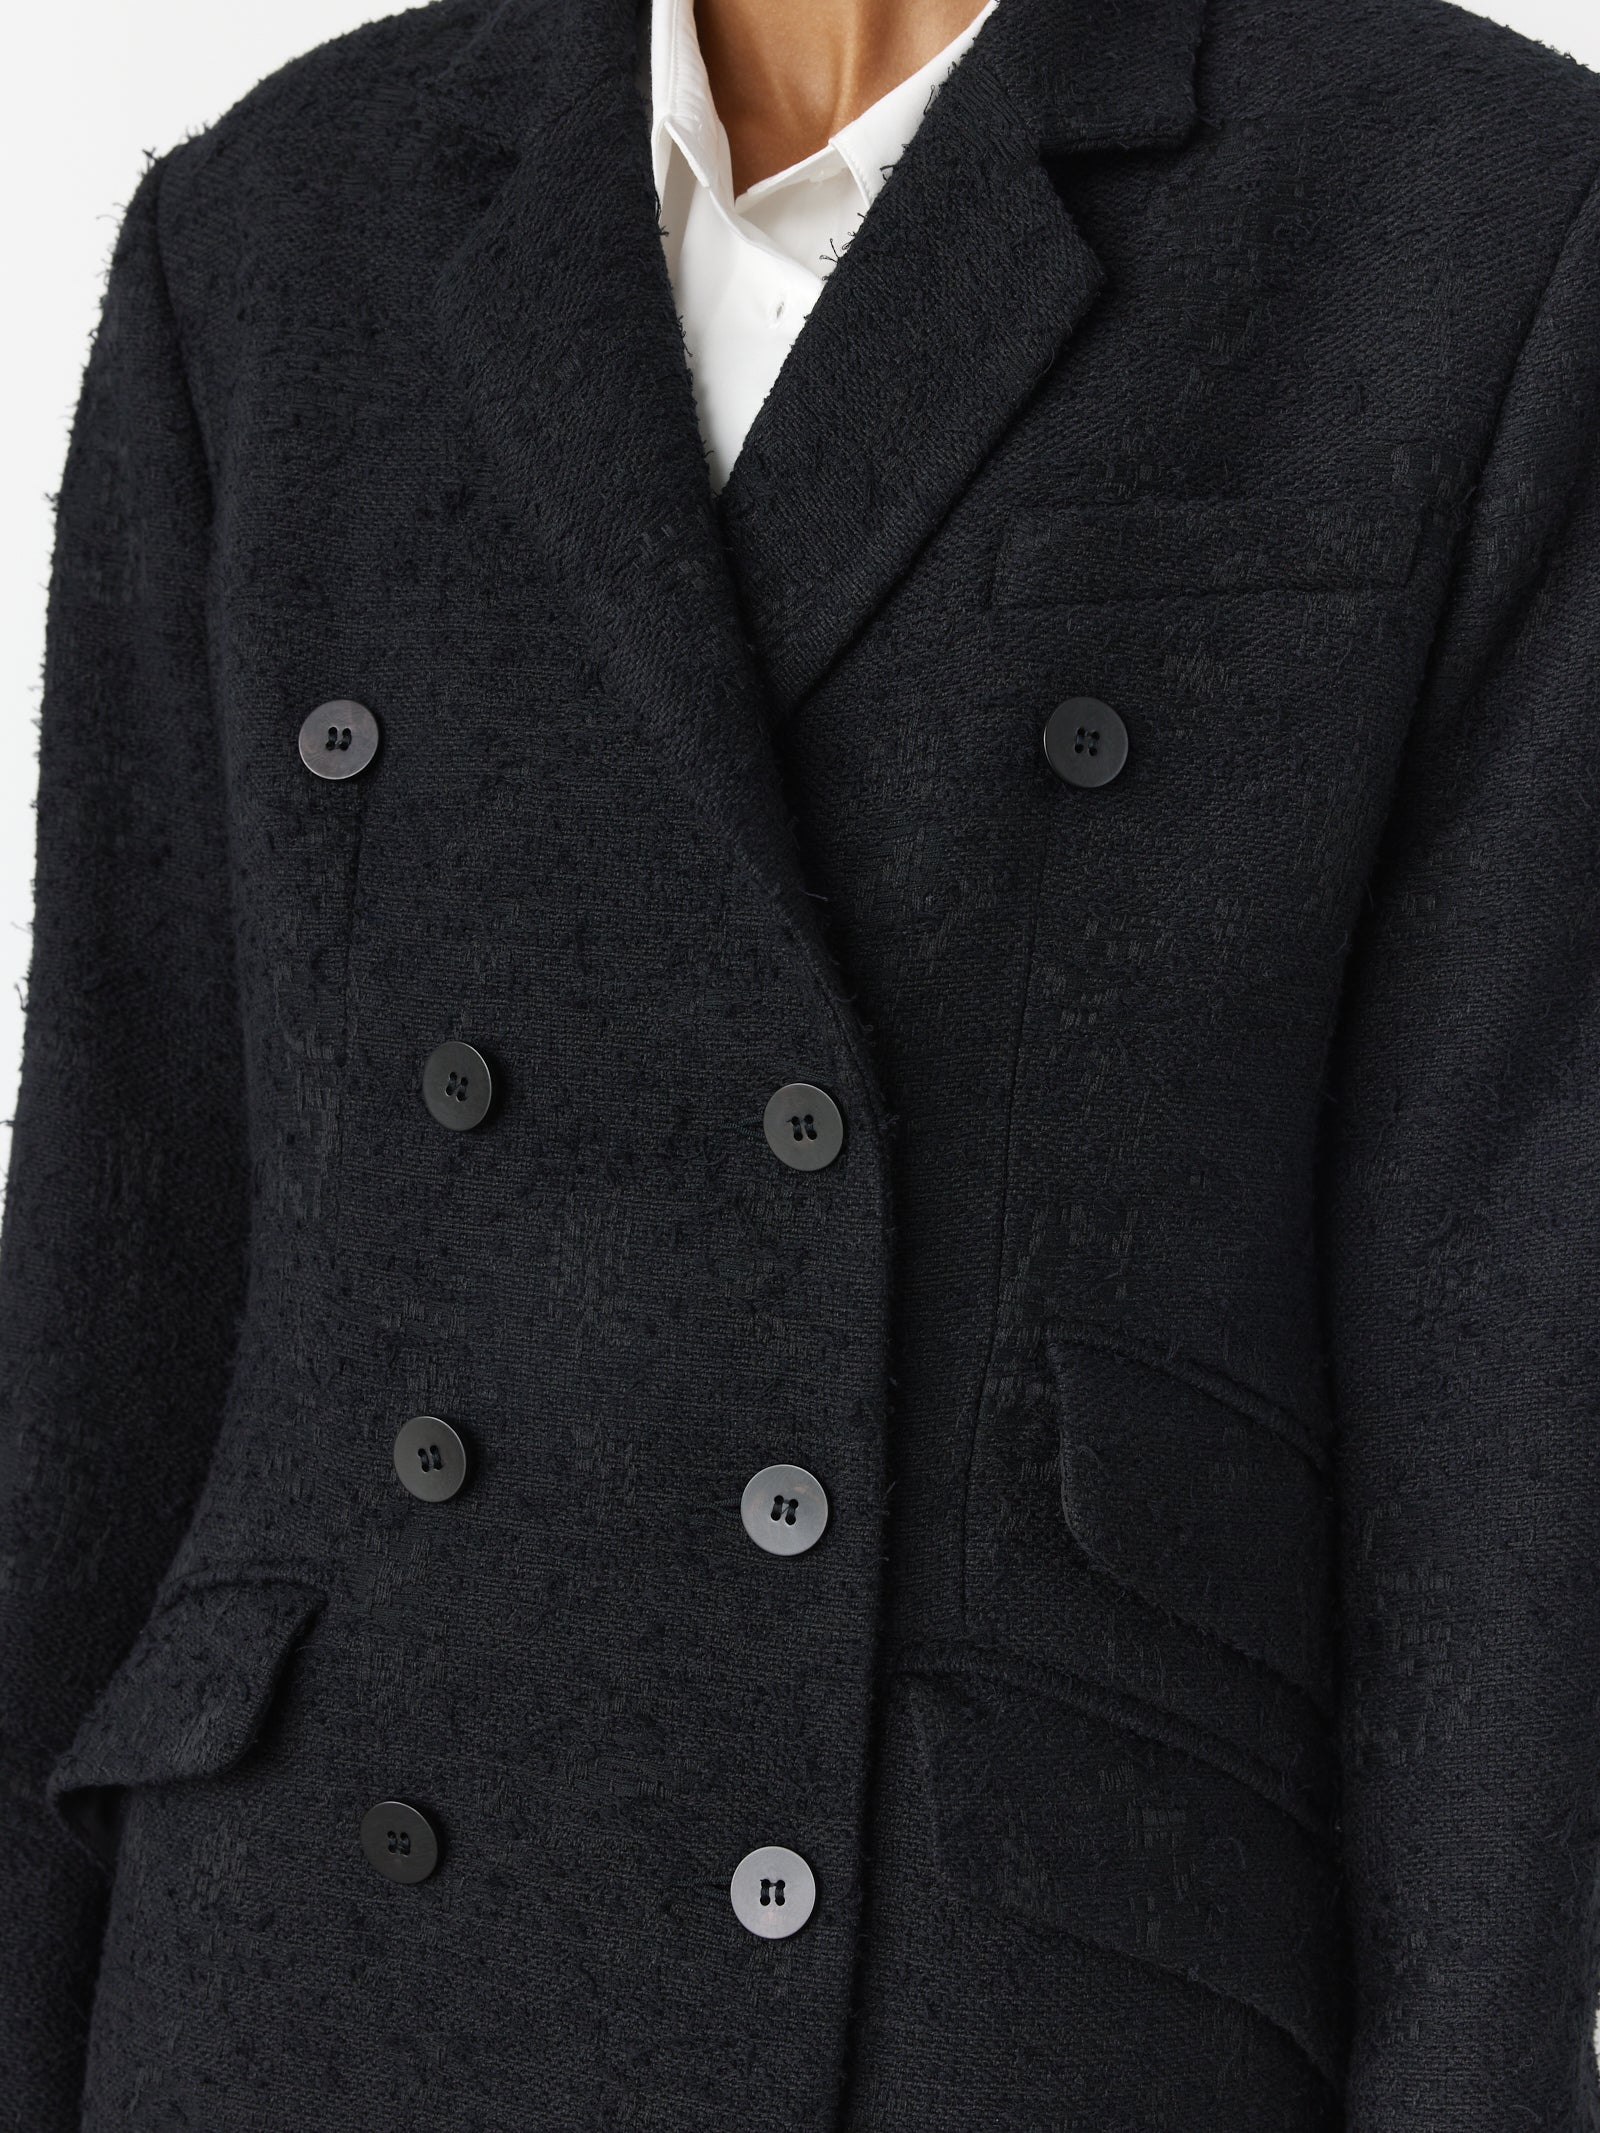 Double Breasted Coat - Black Tweed